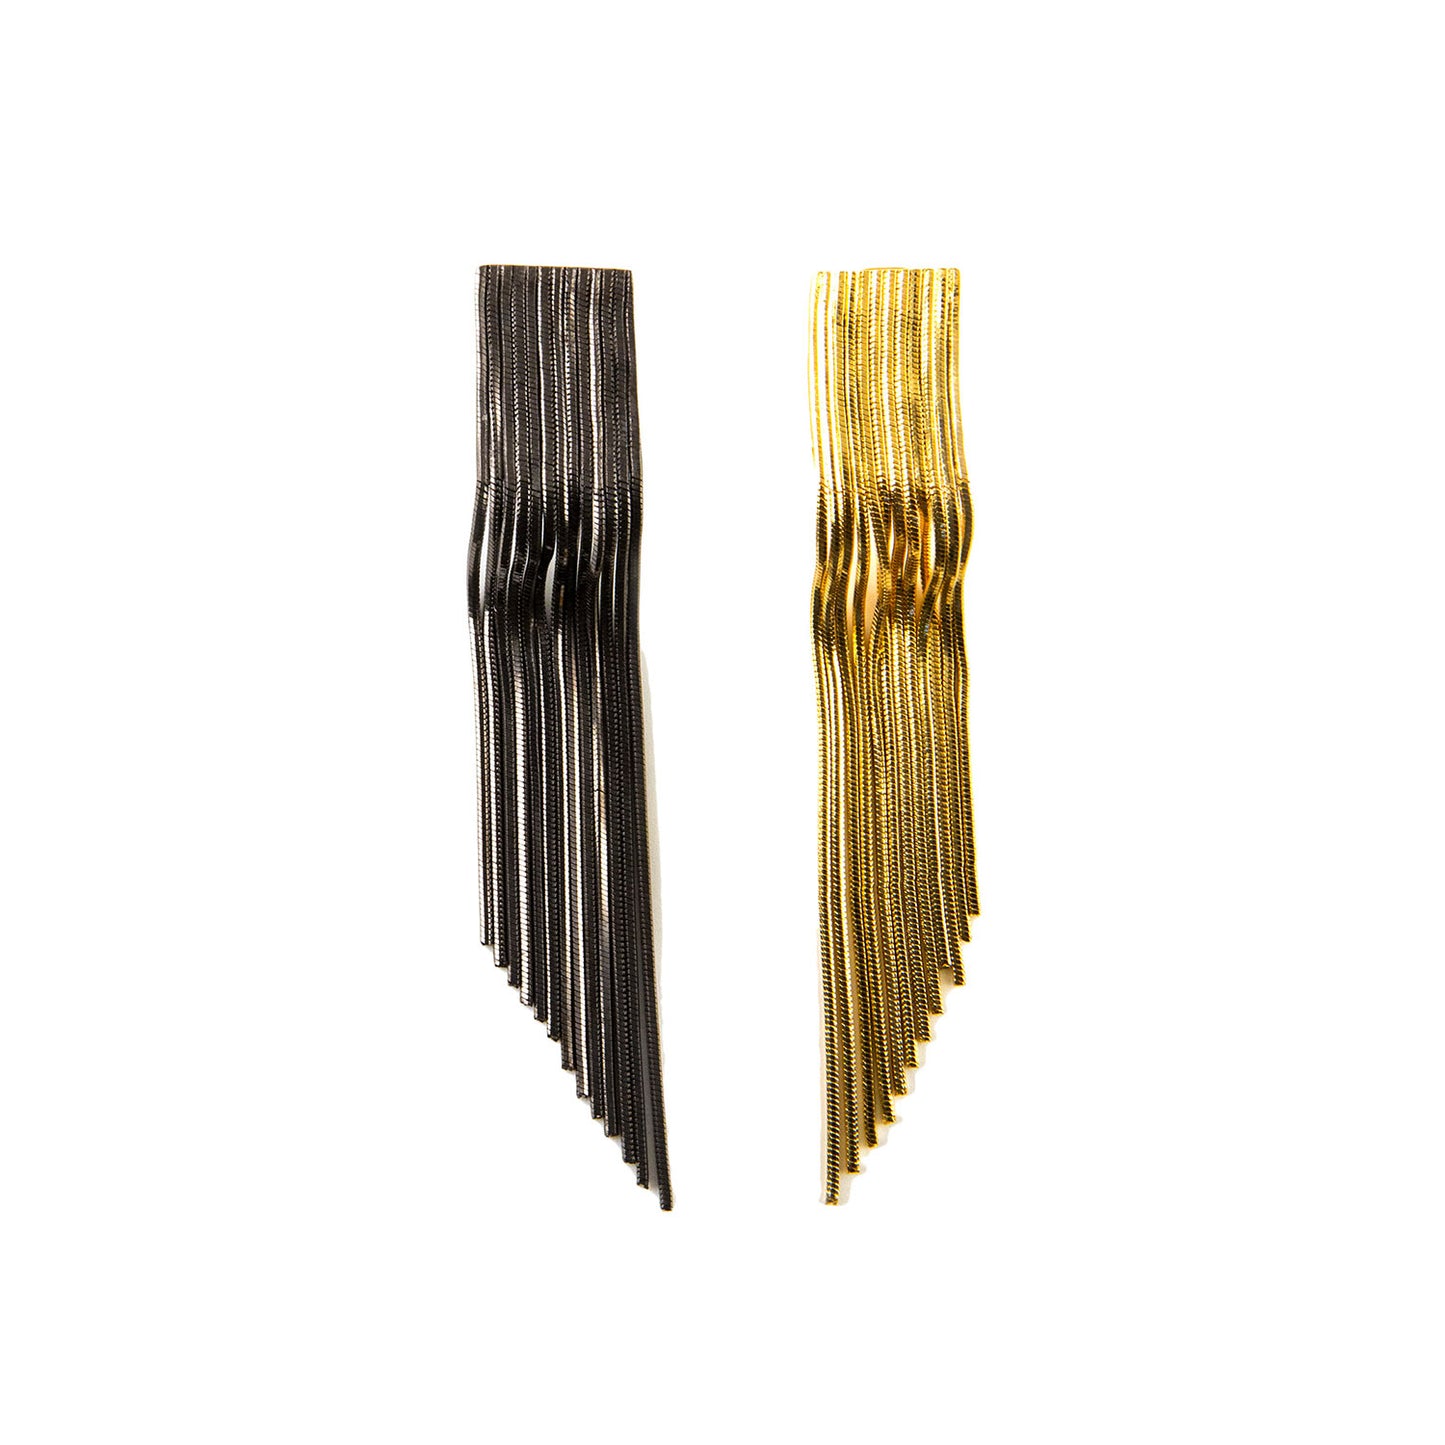 Iosselliani O 843/12AW clip brass earrings